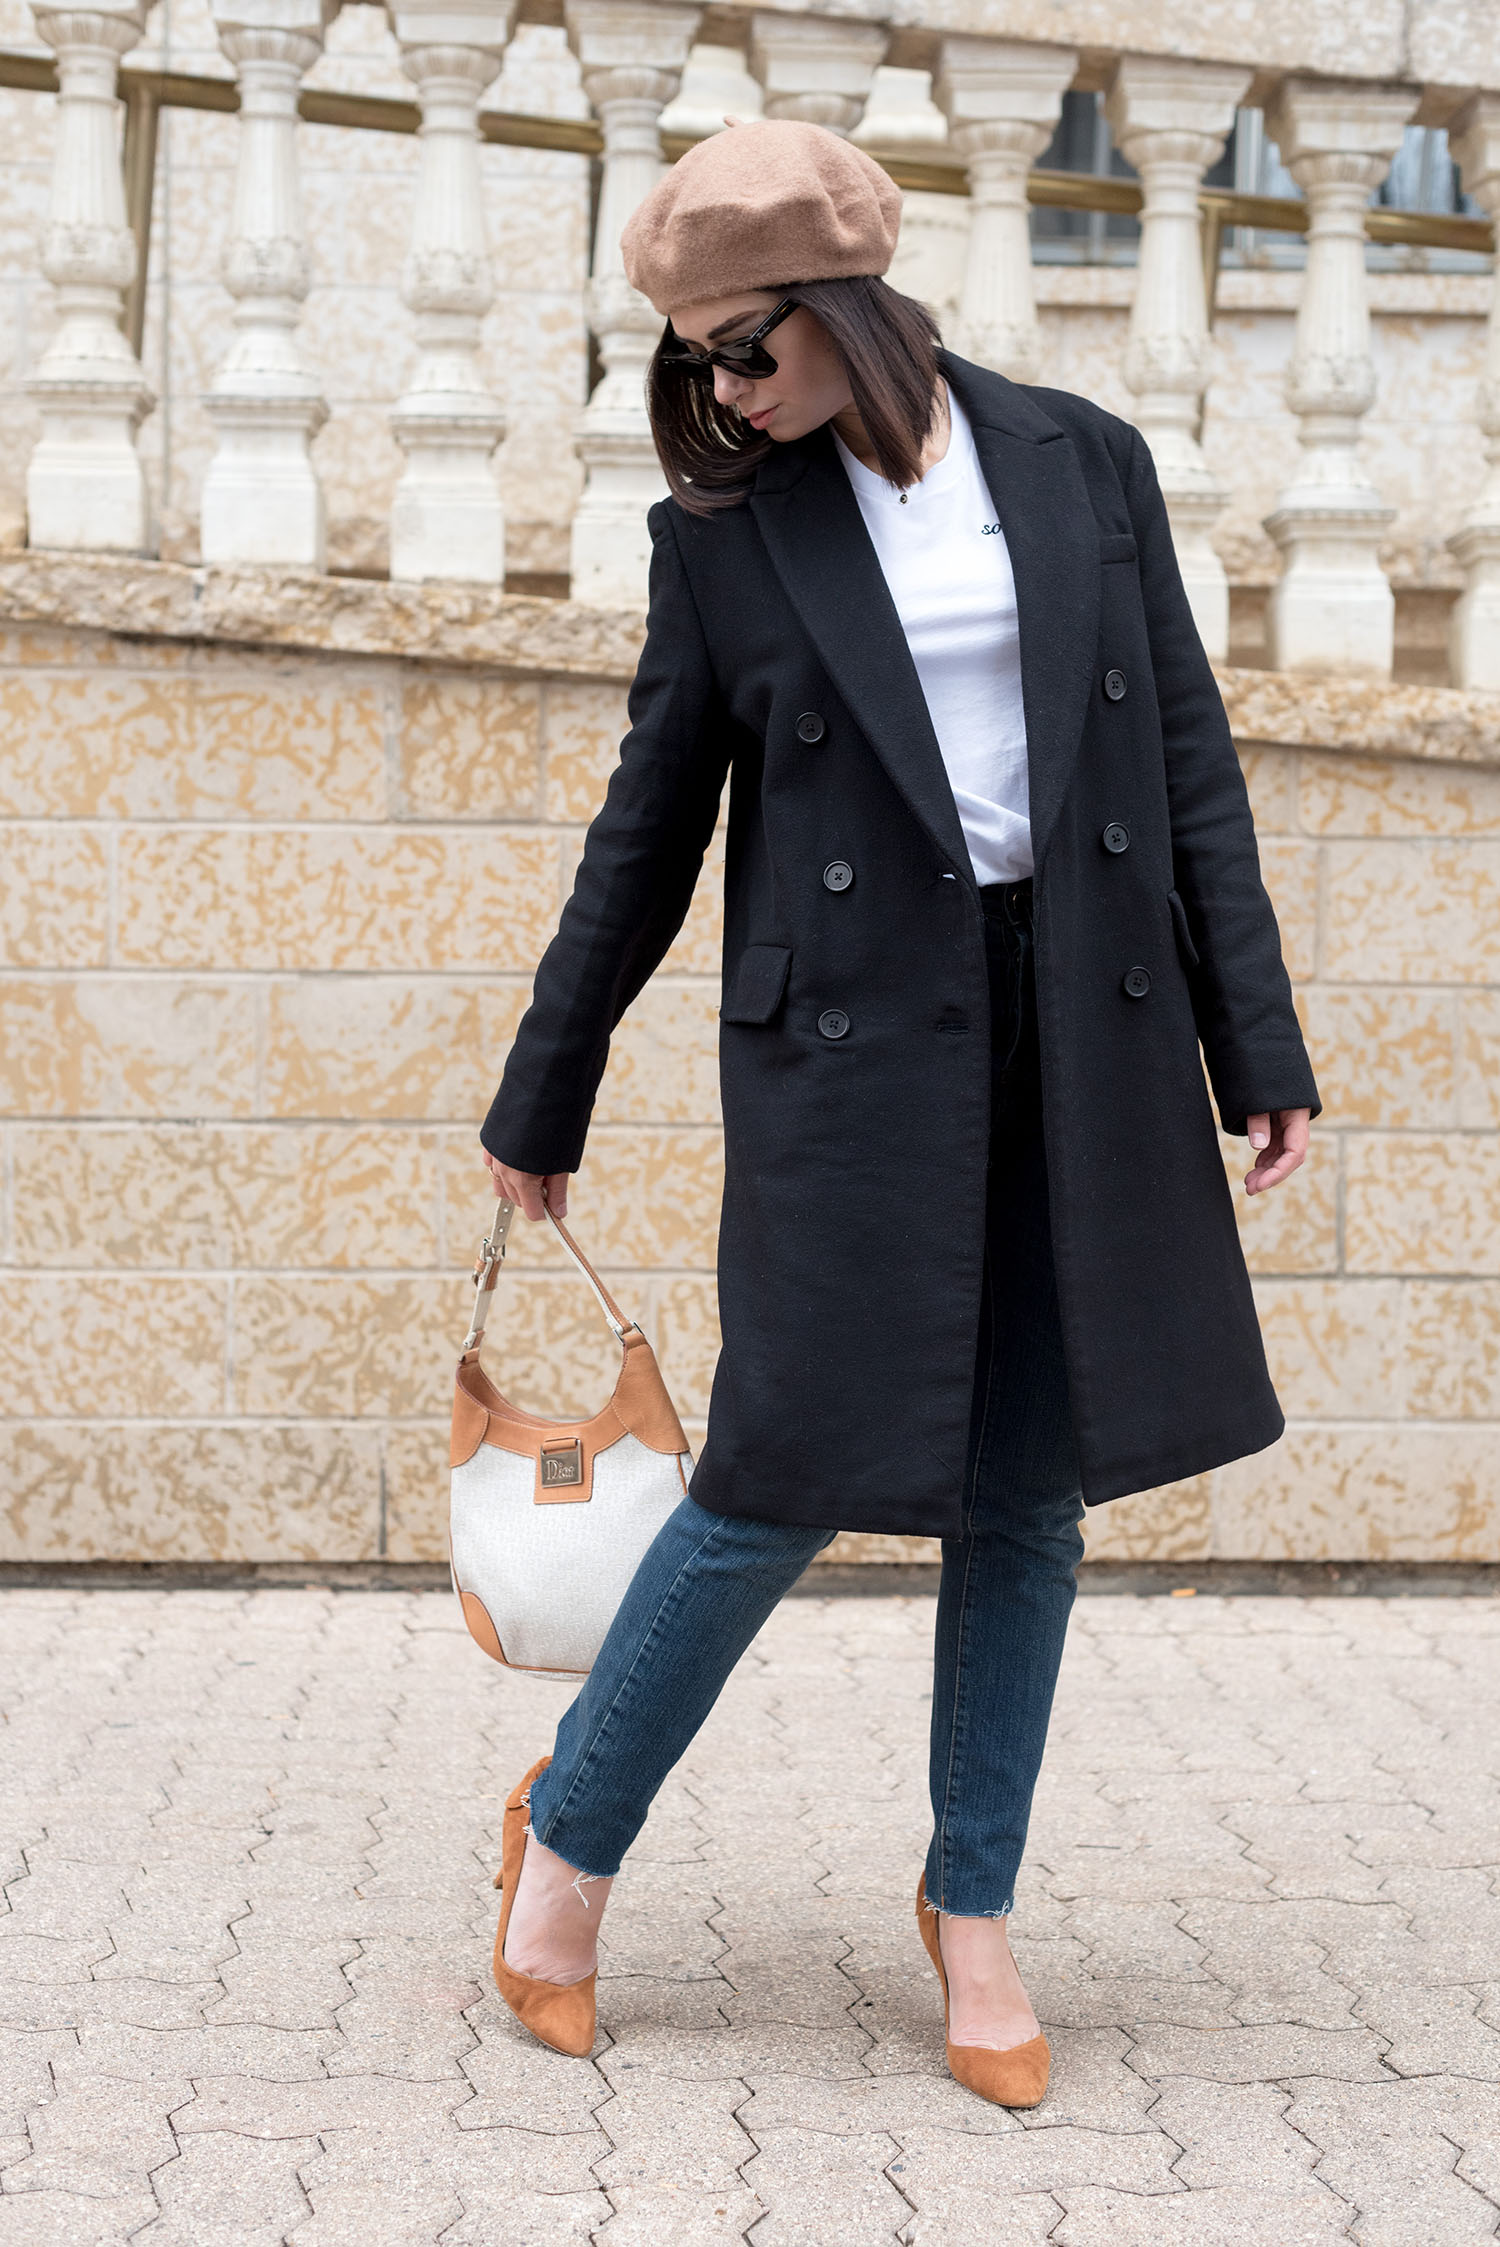 Top Winnipeg fashion blogger Cee Fardoe of Coco & Vera wears Sezane beans and a So Over It Shop tee